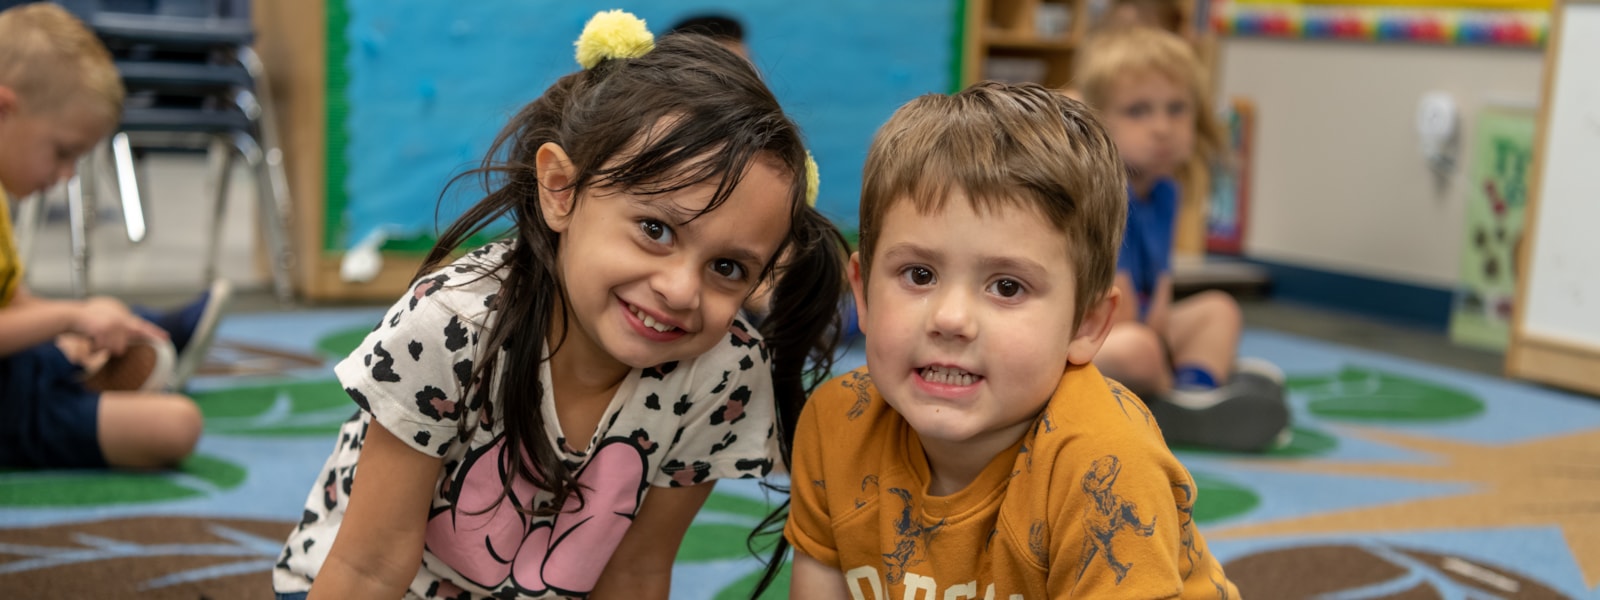 Two preschool students smiling